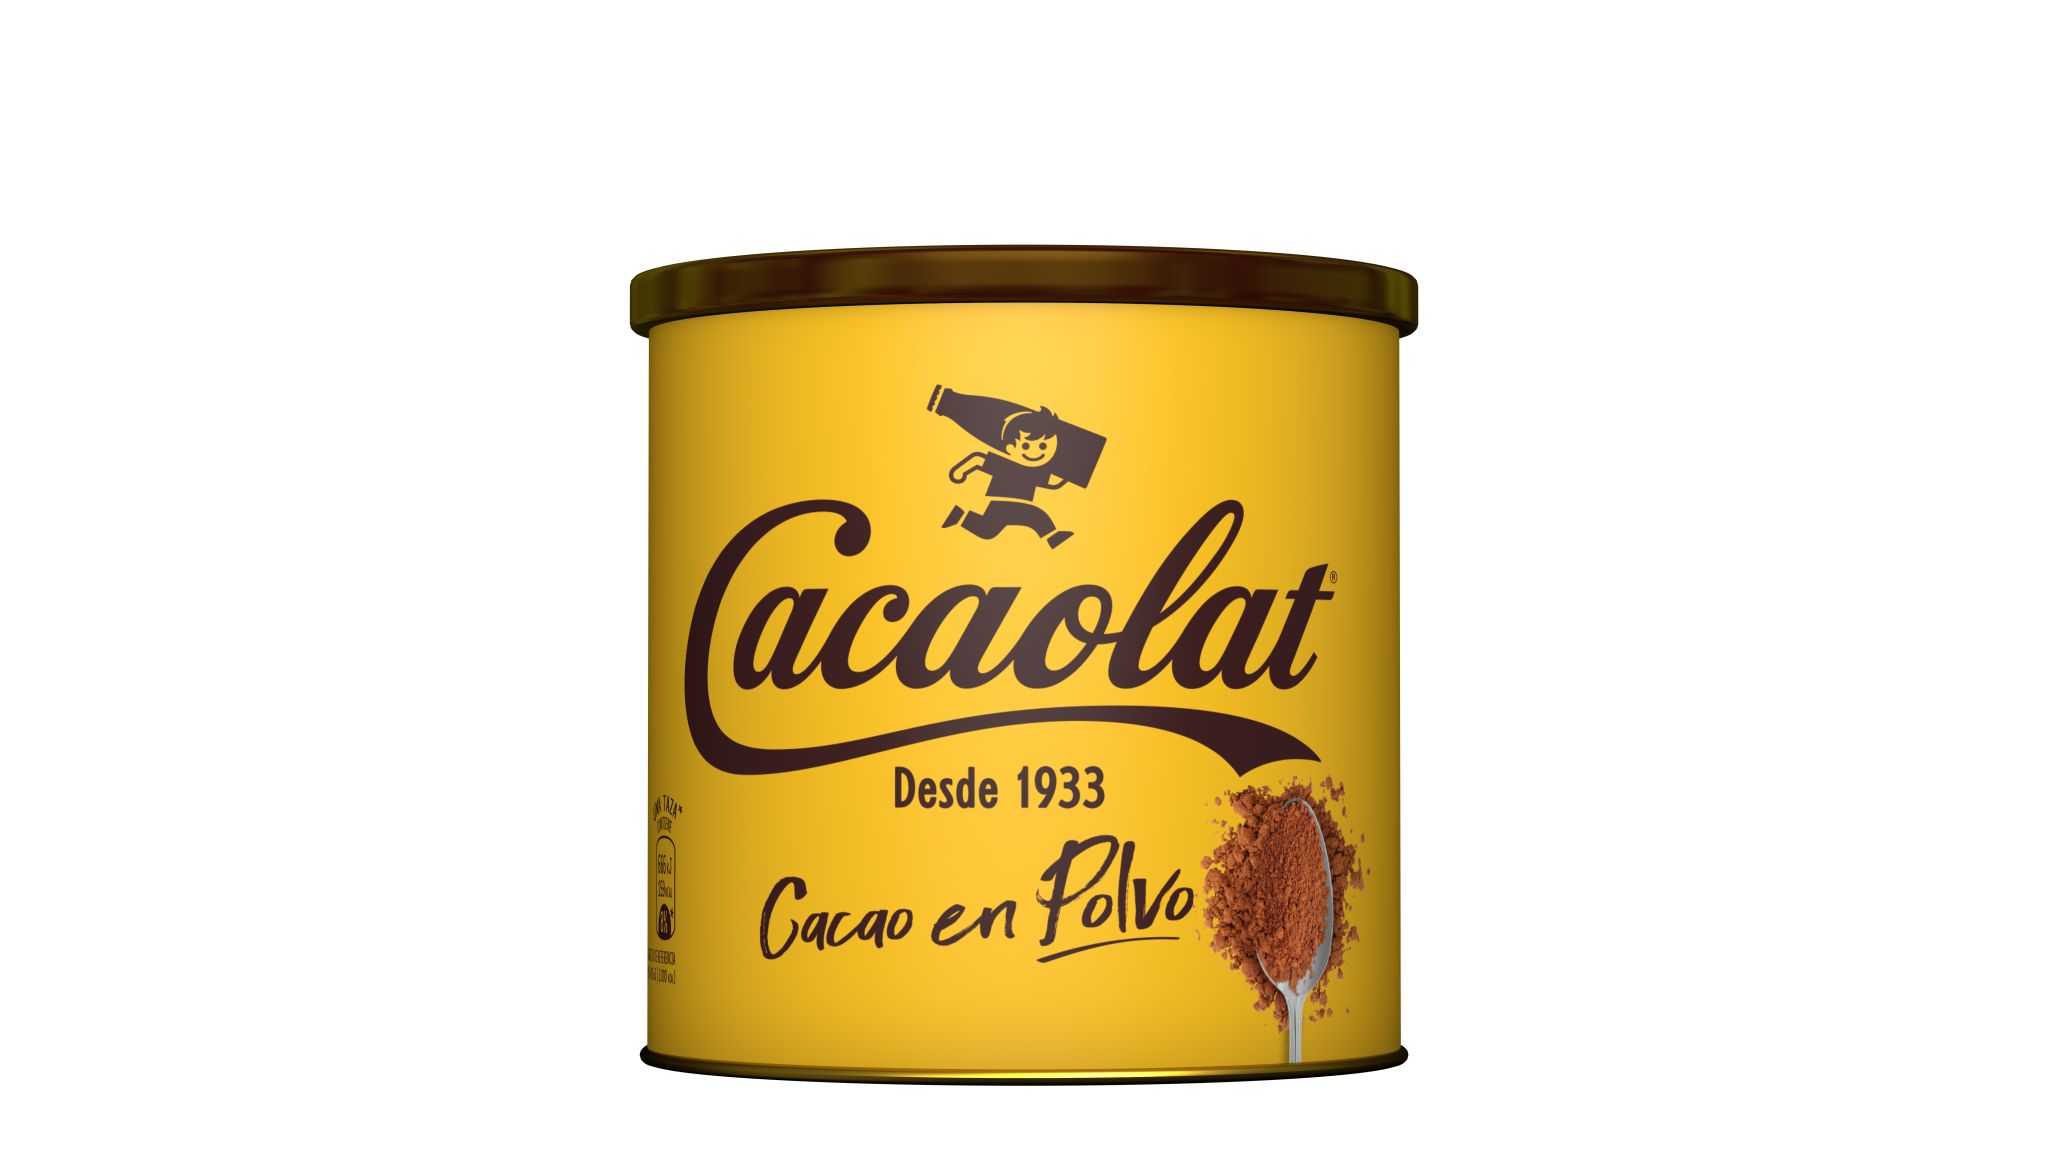 Cacaolat vol ser el nou Nesquik o ColaCao: arriba la xocolata en pols